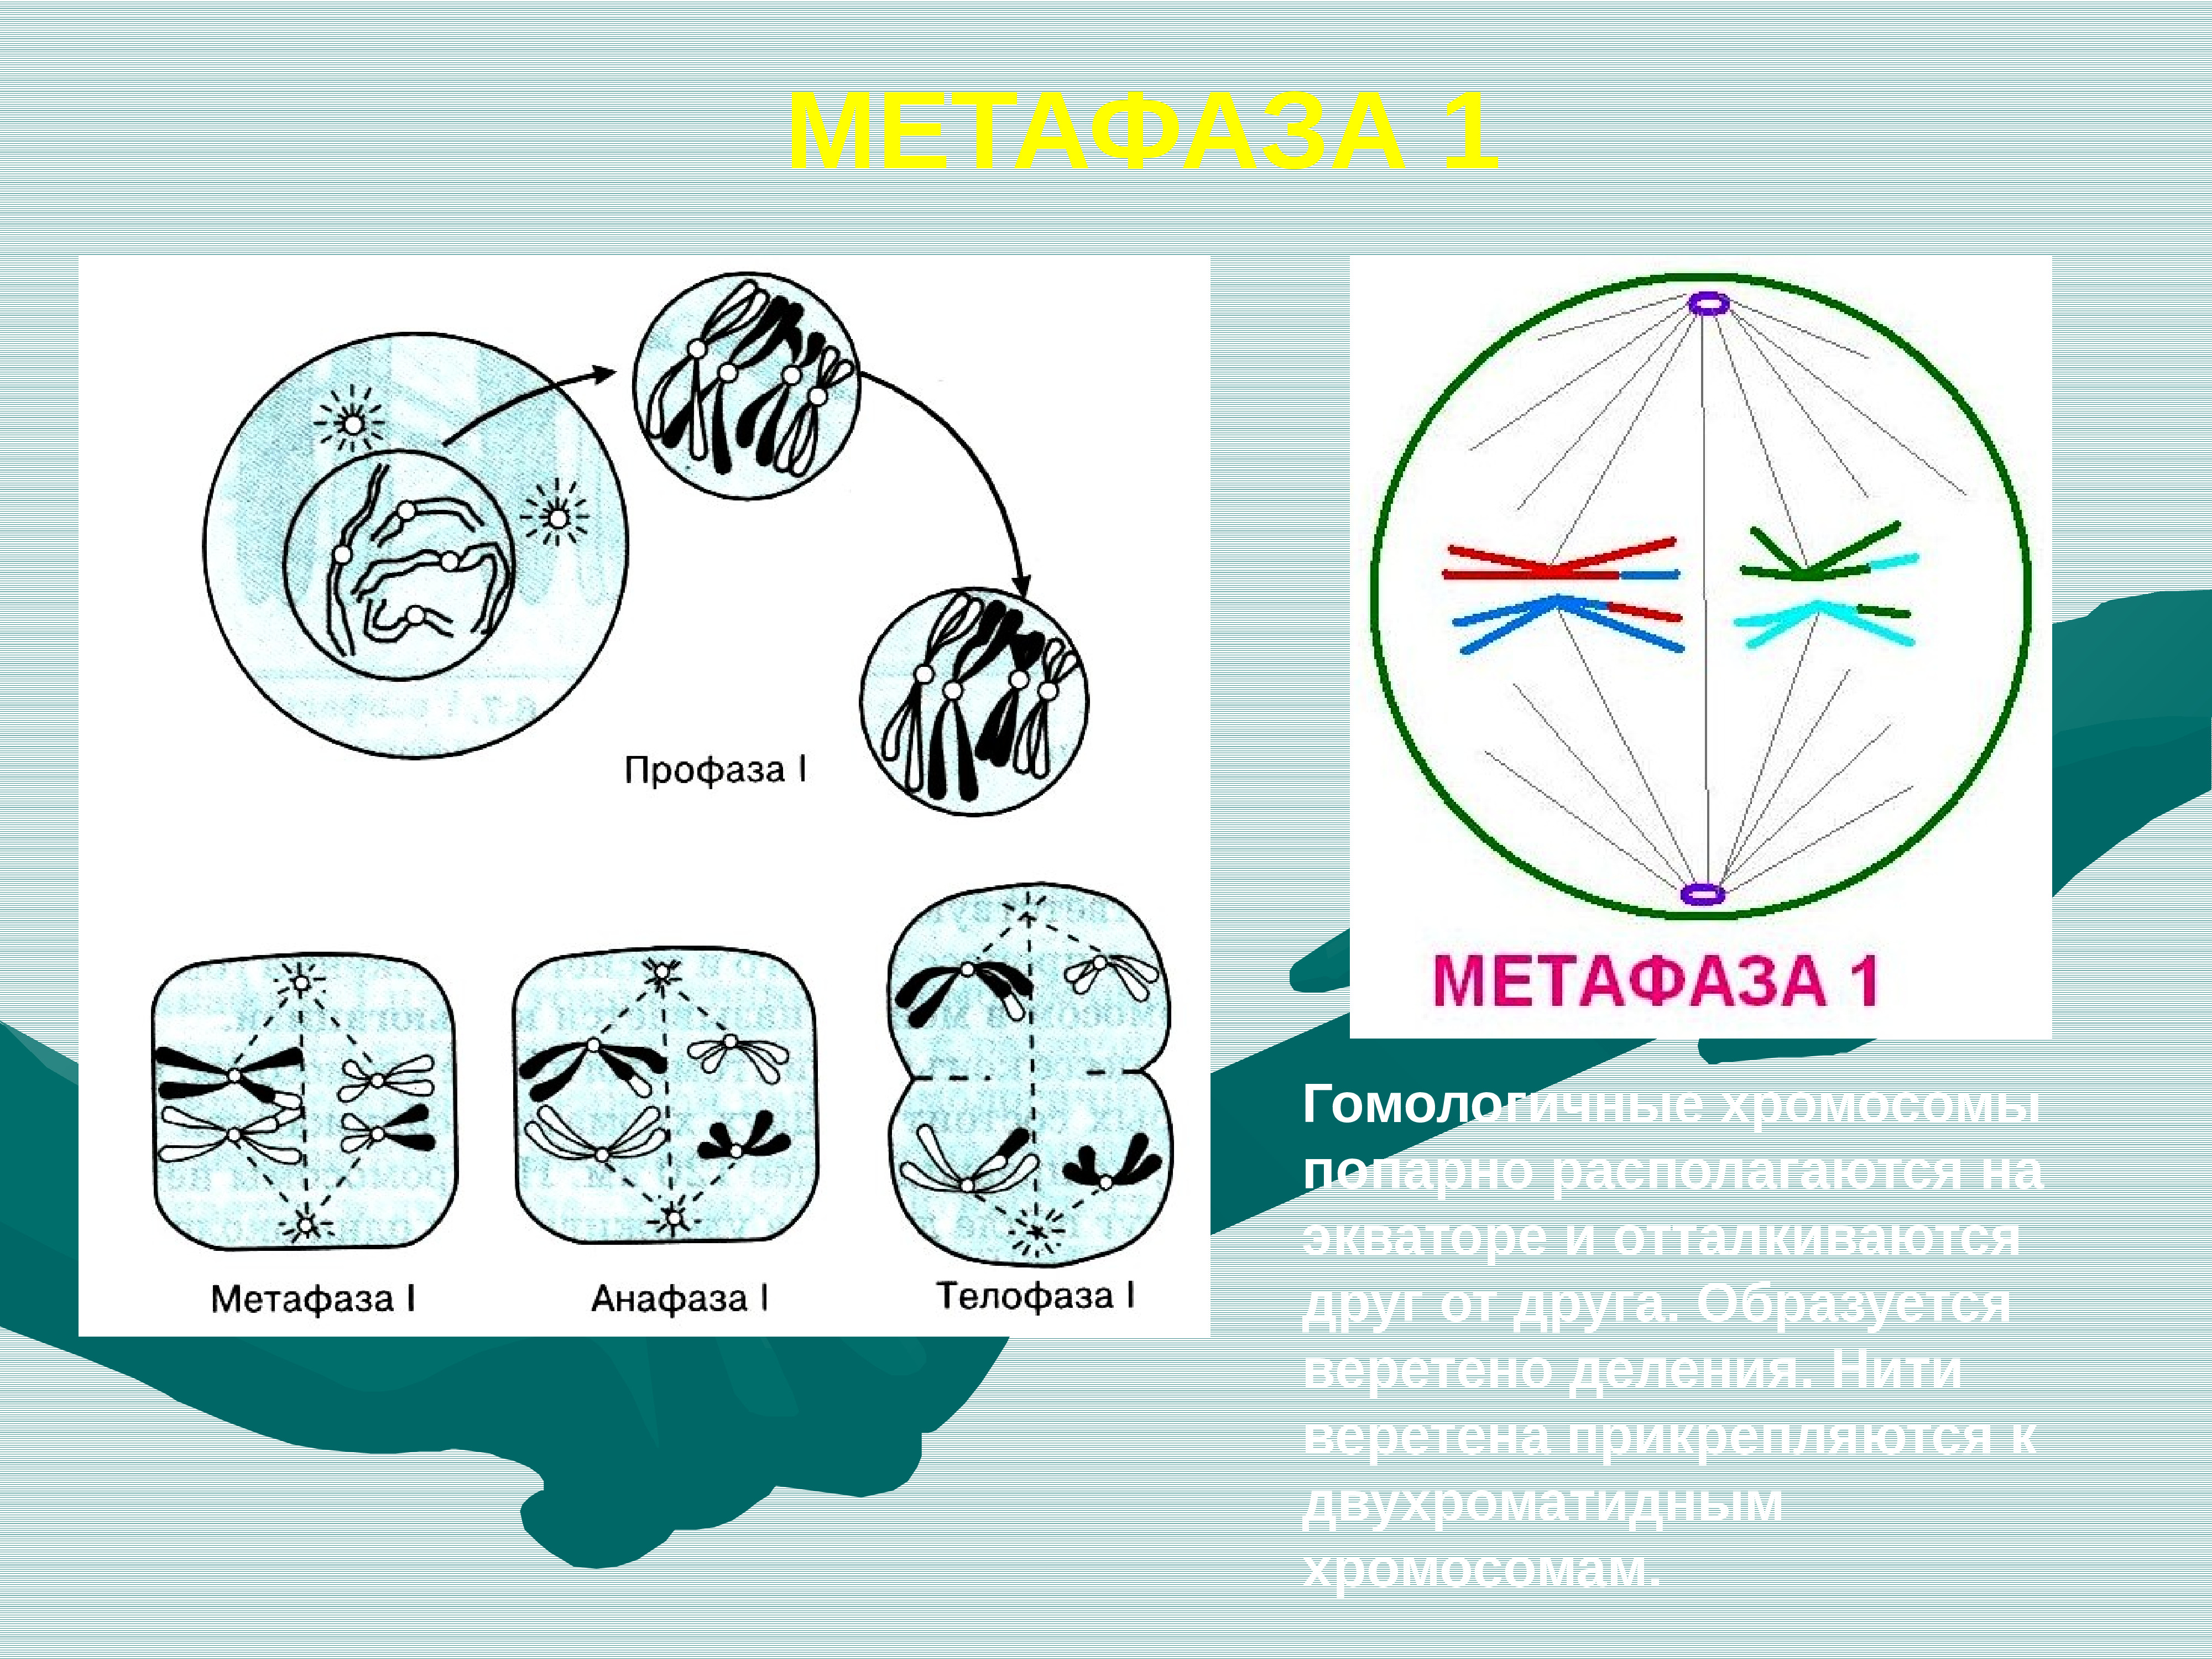 Д спирализация. Метафаза мейоза 2. Метафаза нити веретена деления. Метафаза мейоза 1. Метафаза Веретено деления.